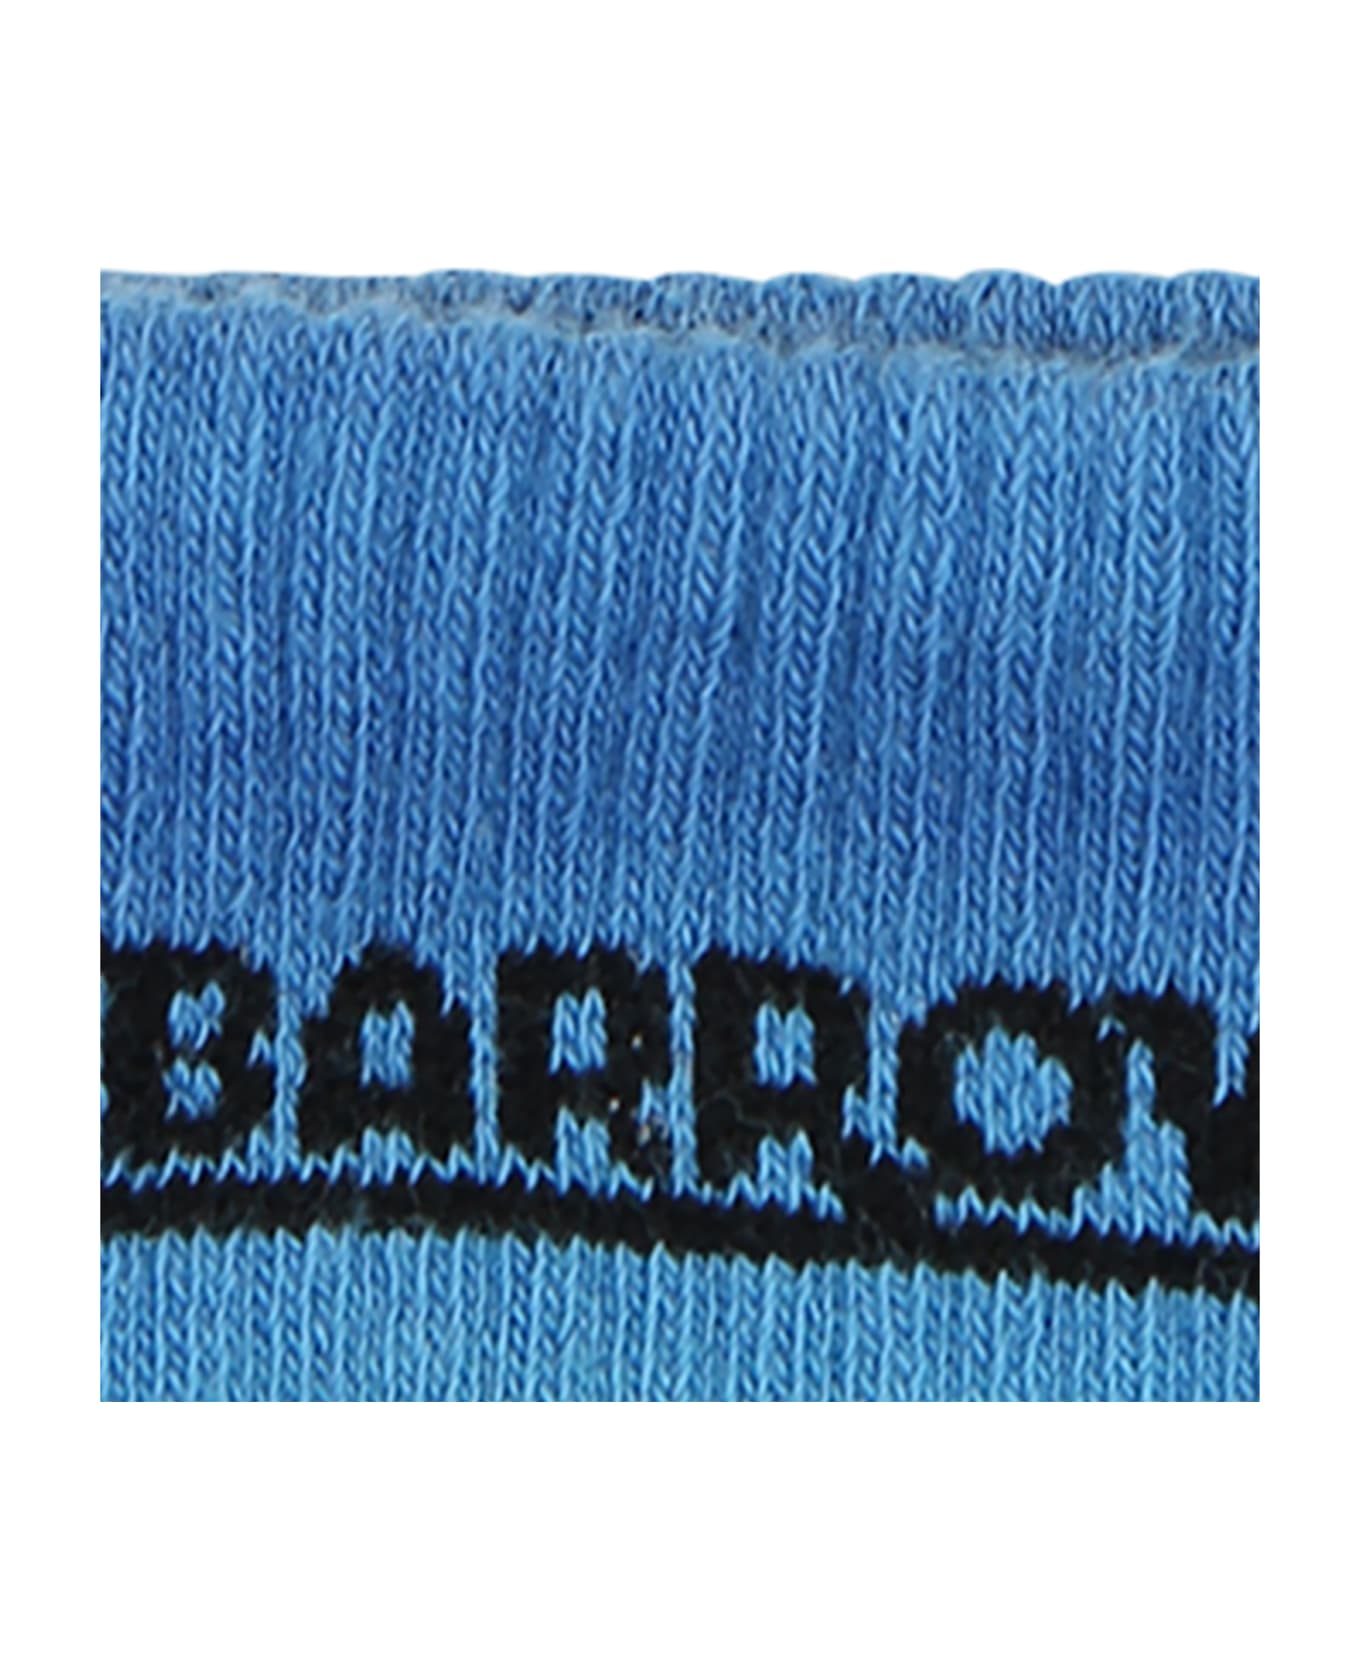 Barrow Light Blue Socks For Kids With Smiley - Light Blue